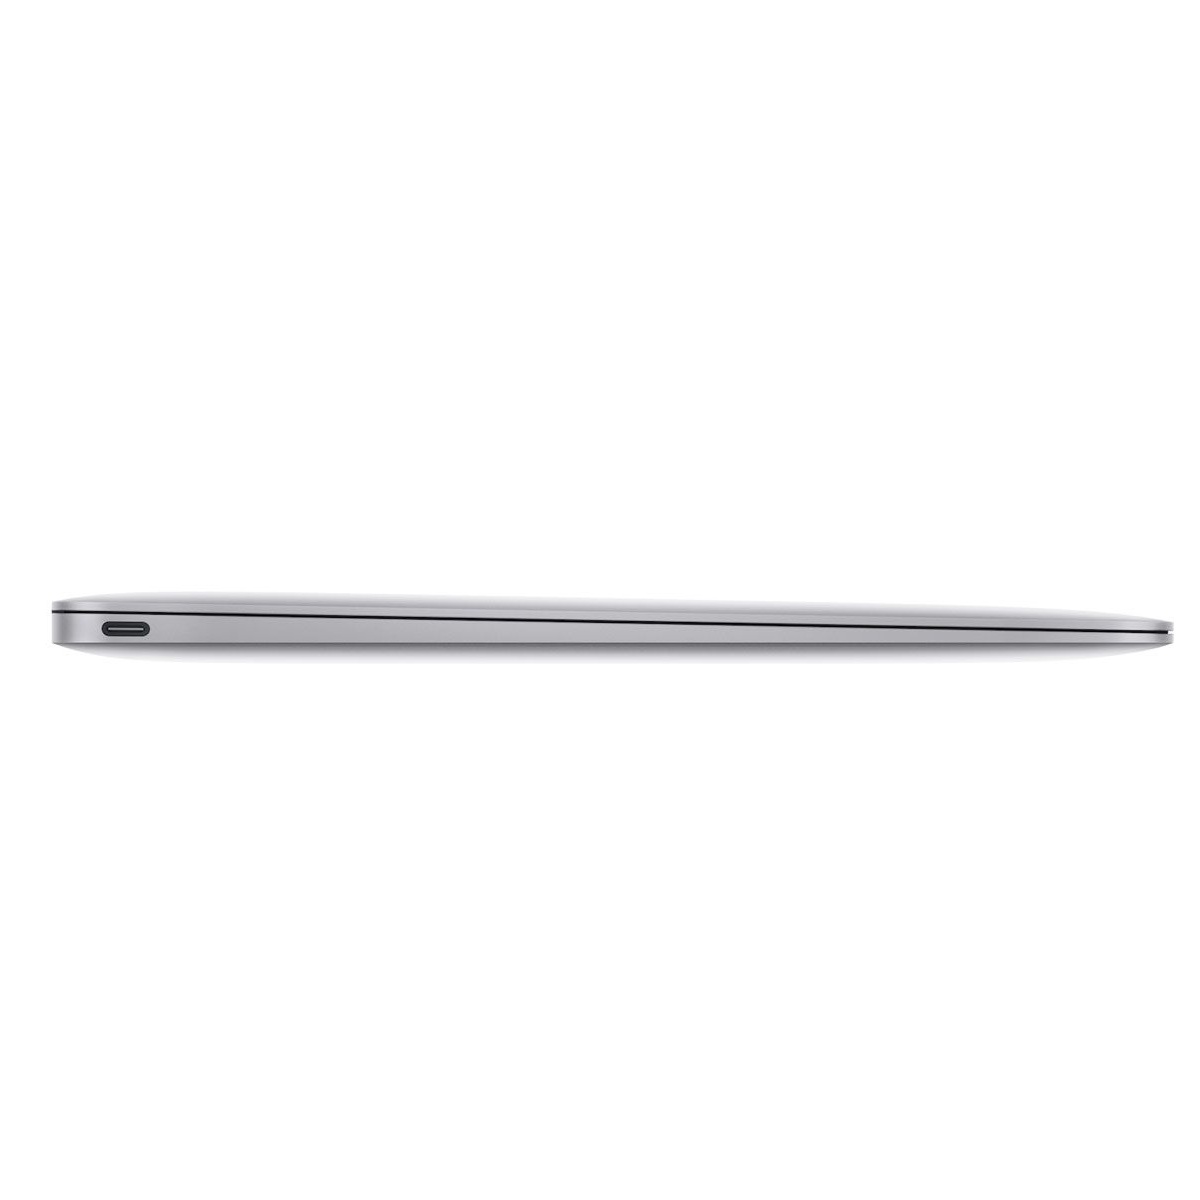 Ноутбук Apple MacBook 12 Retina Early 2015 Space Grey (MJY42RU/A) (Core M 1200 Mhz/12.0/2304x1440/8.0Gb/512Gb SSD/DVD нет/Intel HD Graphics 5300/Wi-Fi/Bluetooth/MacOS X)